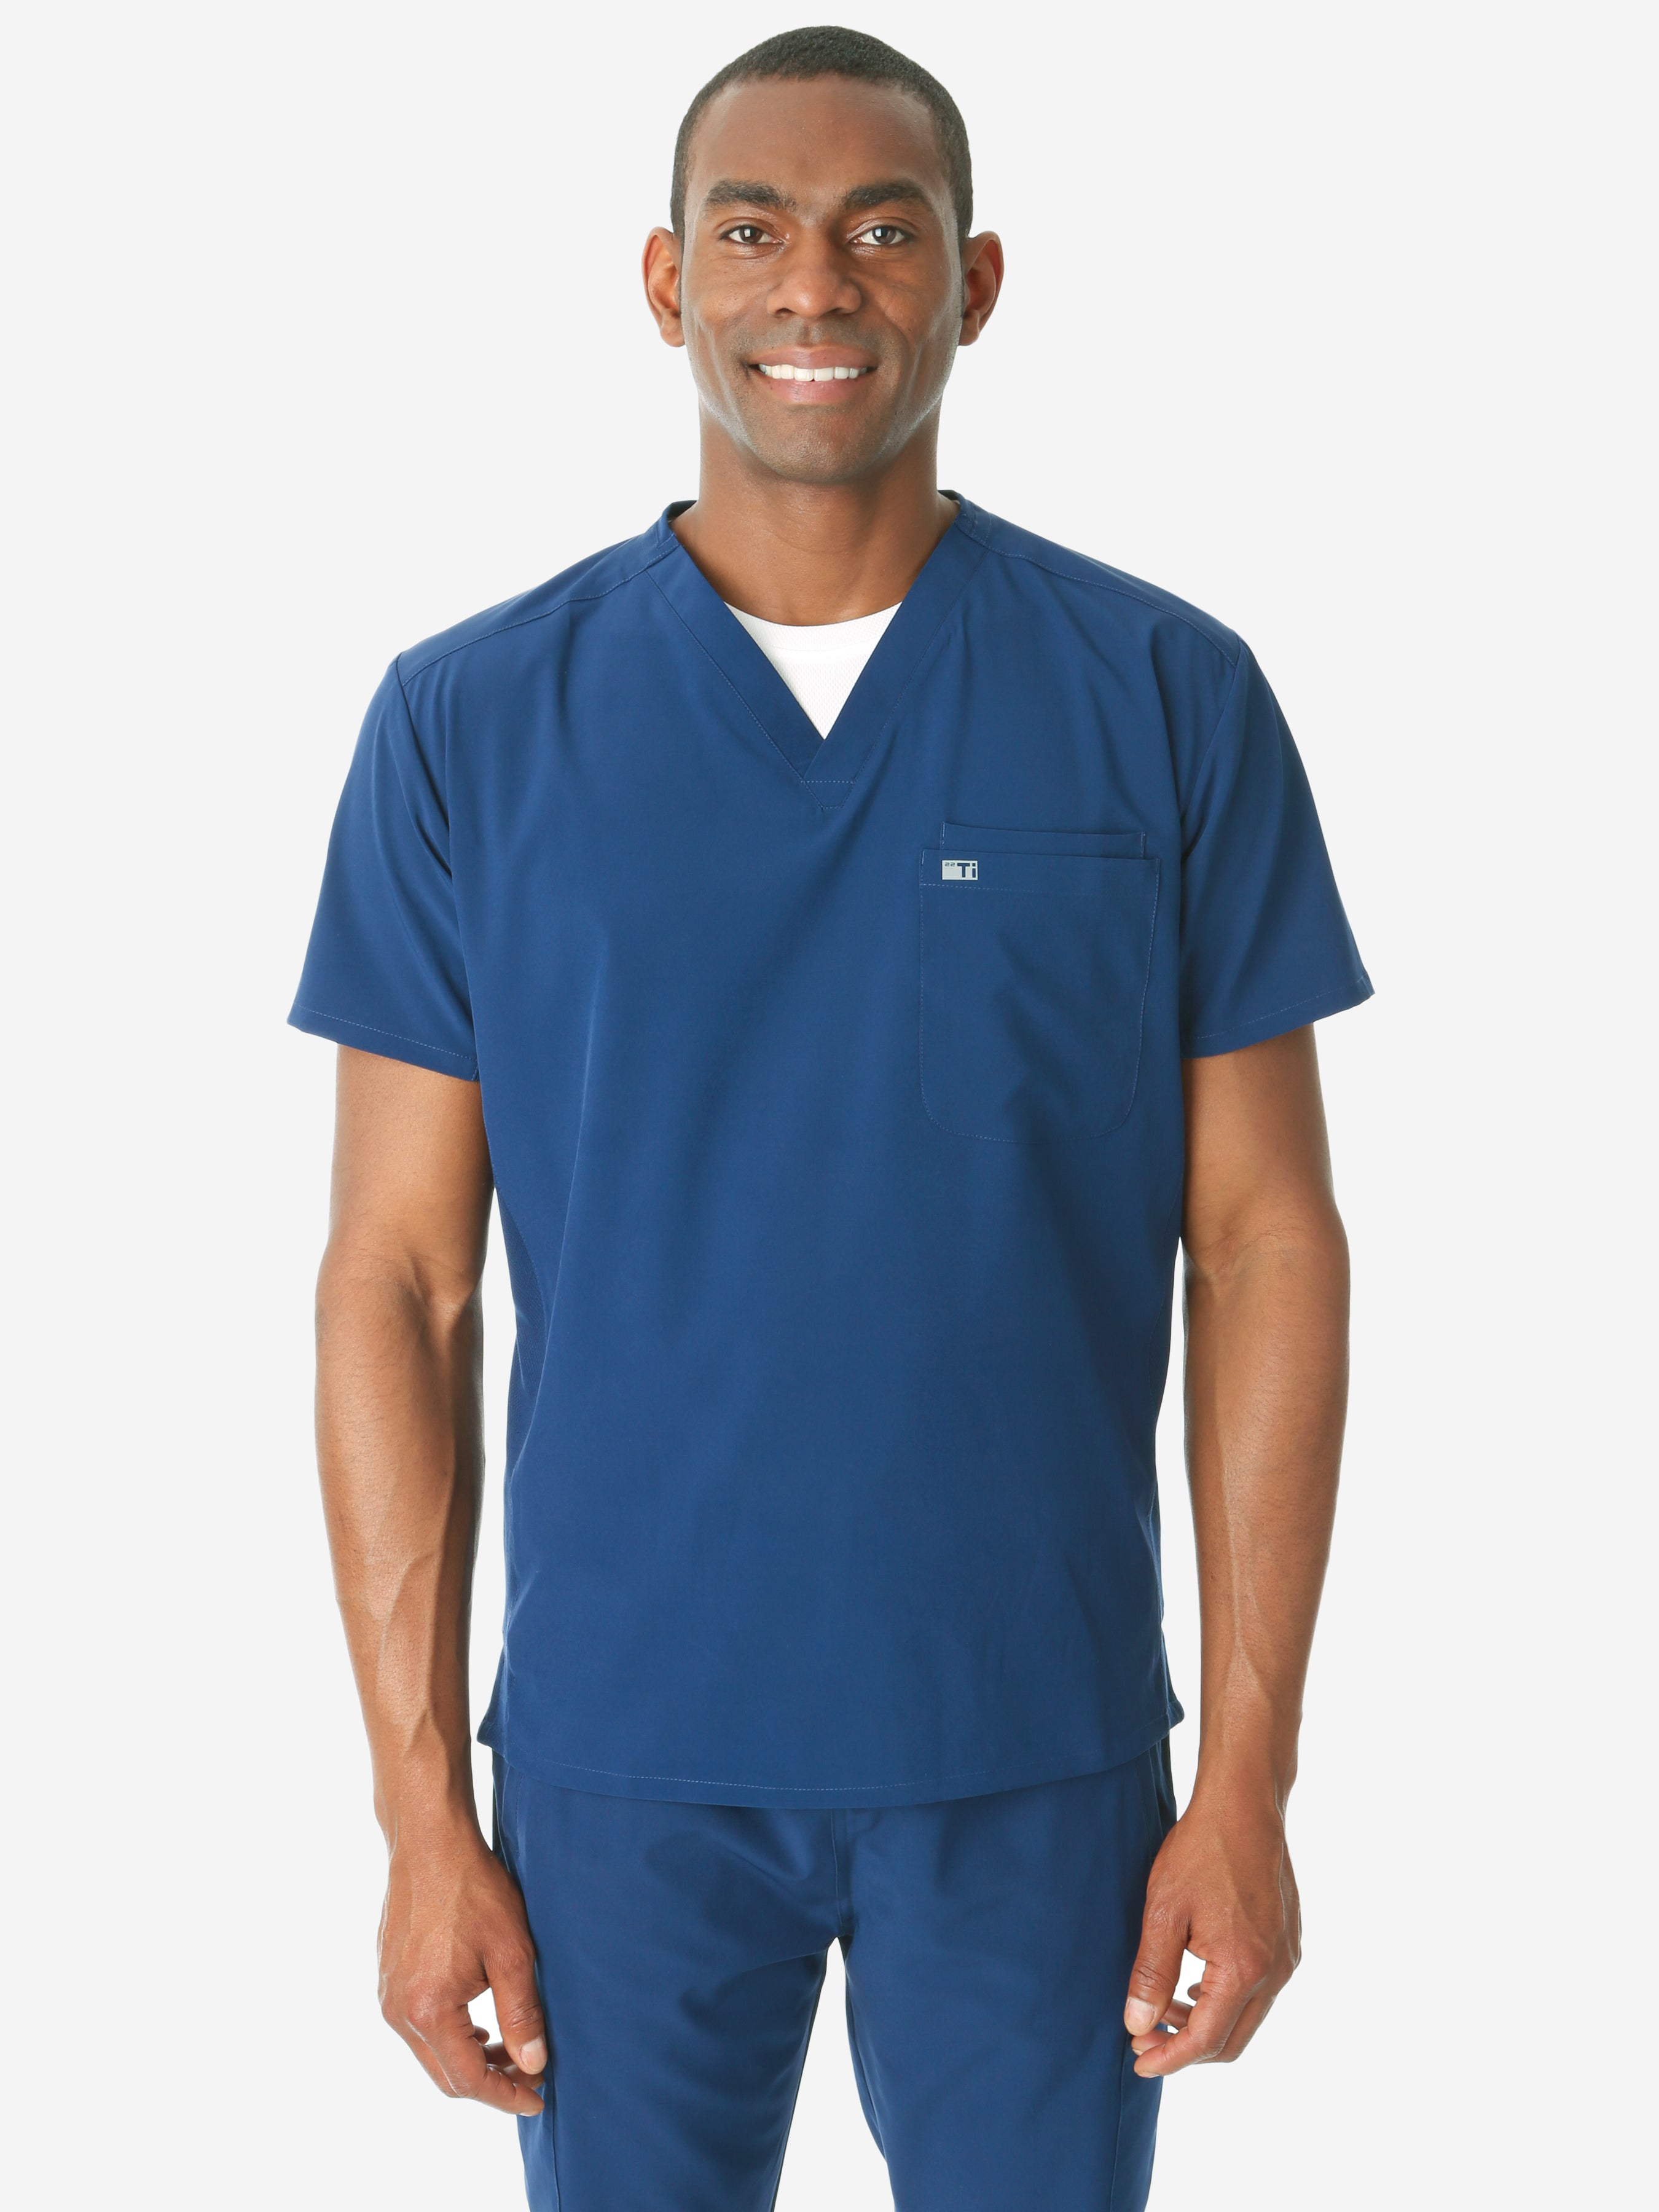 Underscrubs  The Best Scrub Undershirts for Medical Professionals